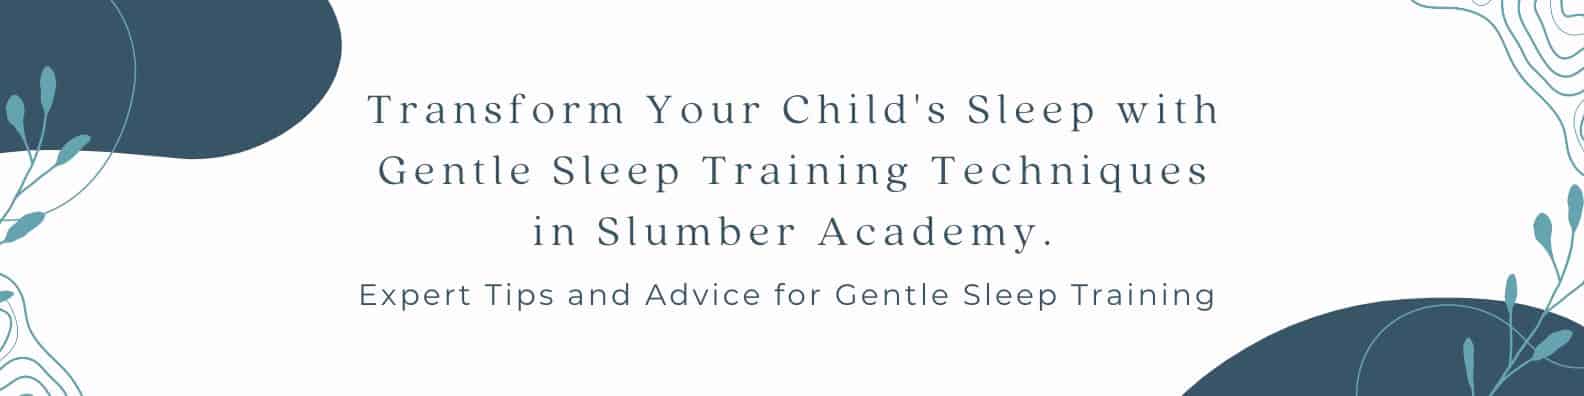 Transform your child's sleep banner